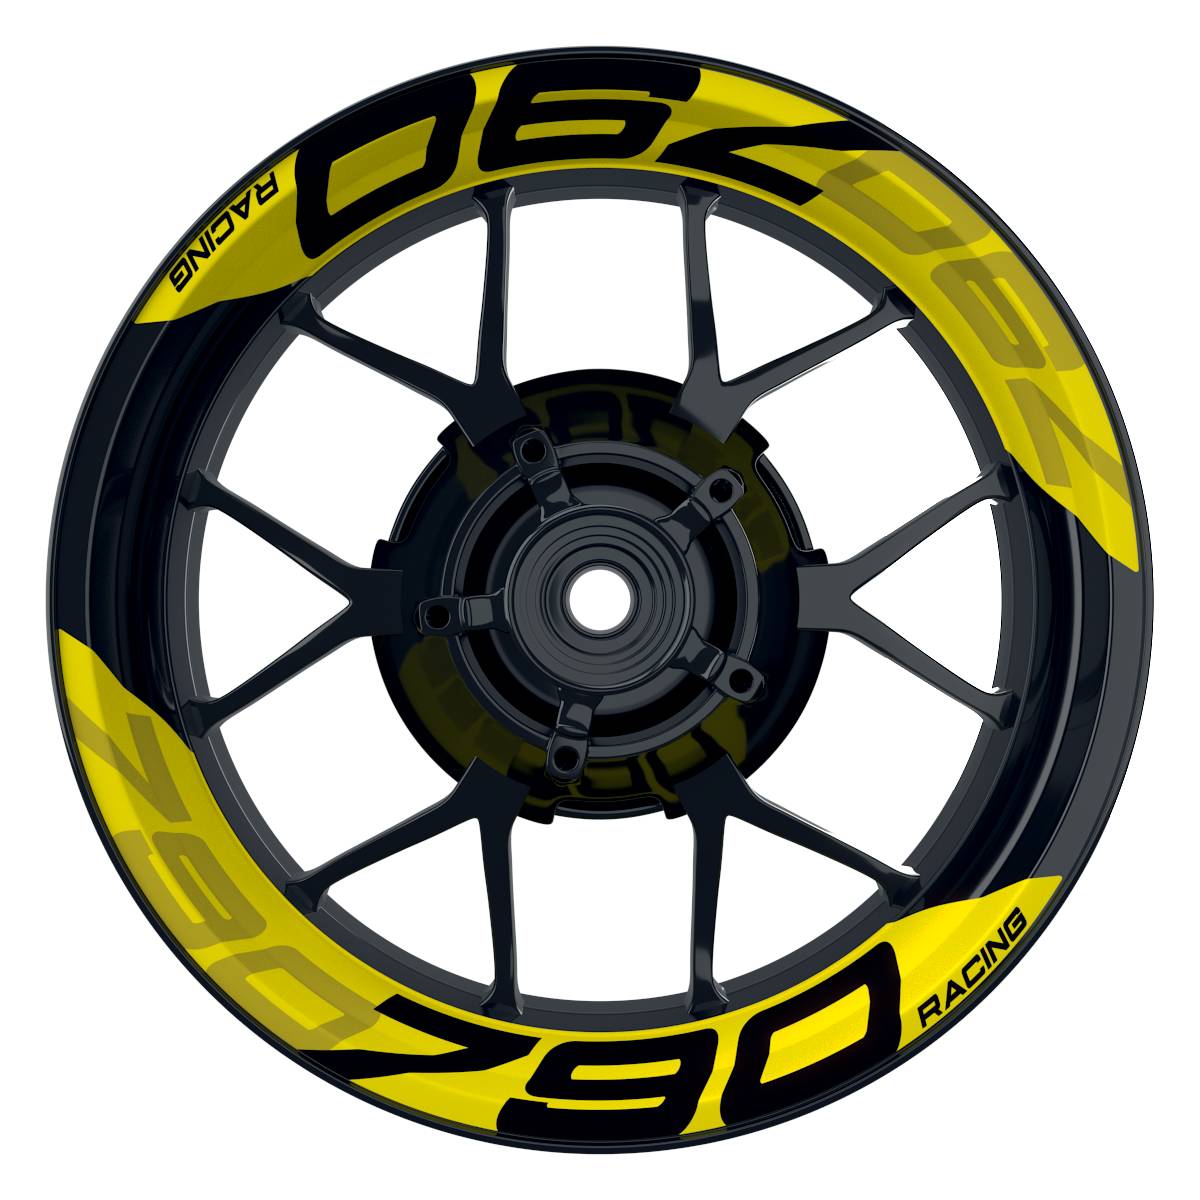 Wheelsticker Felgenaufkleber KTM Racing 790 einfarbig V2 gelb Frontansicht